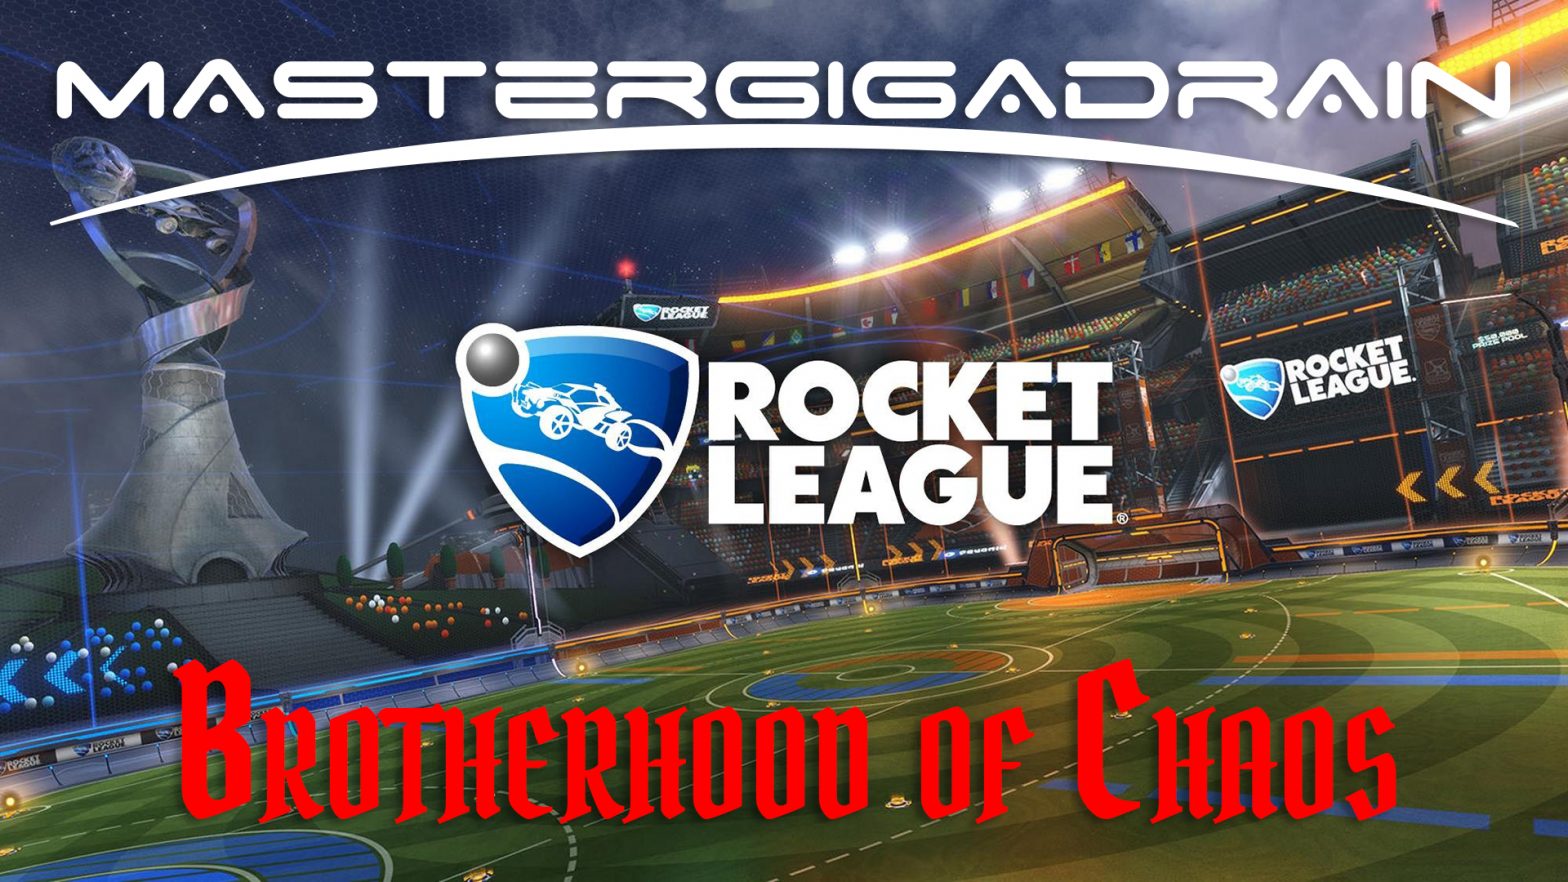 Brotherhood of Chaos I | Rocket League (Xbox)